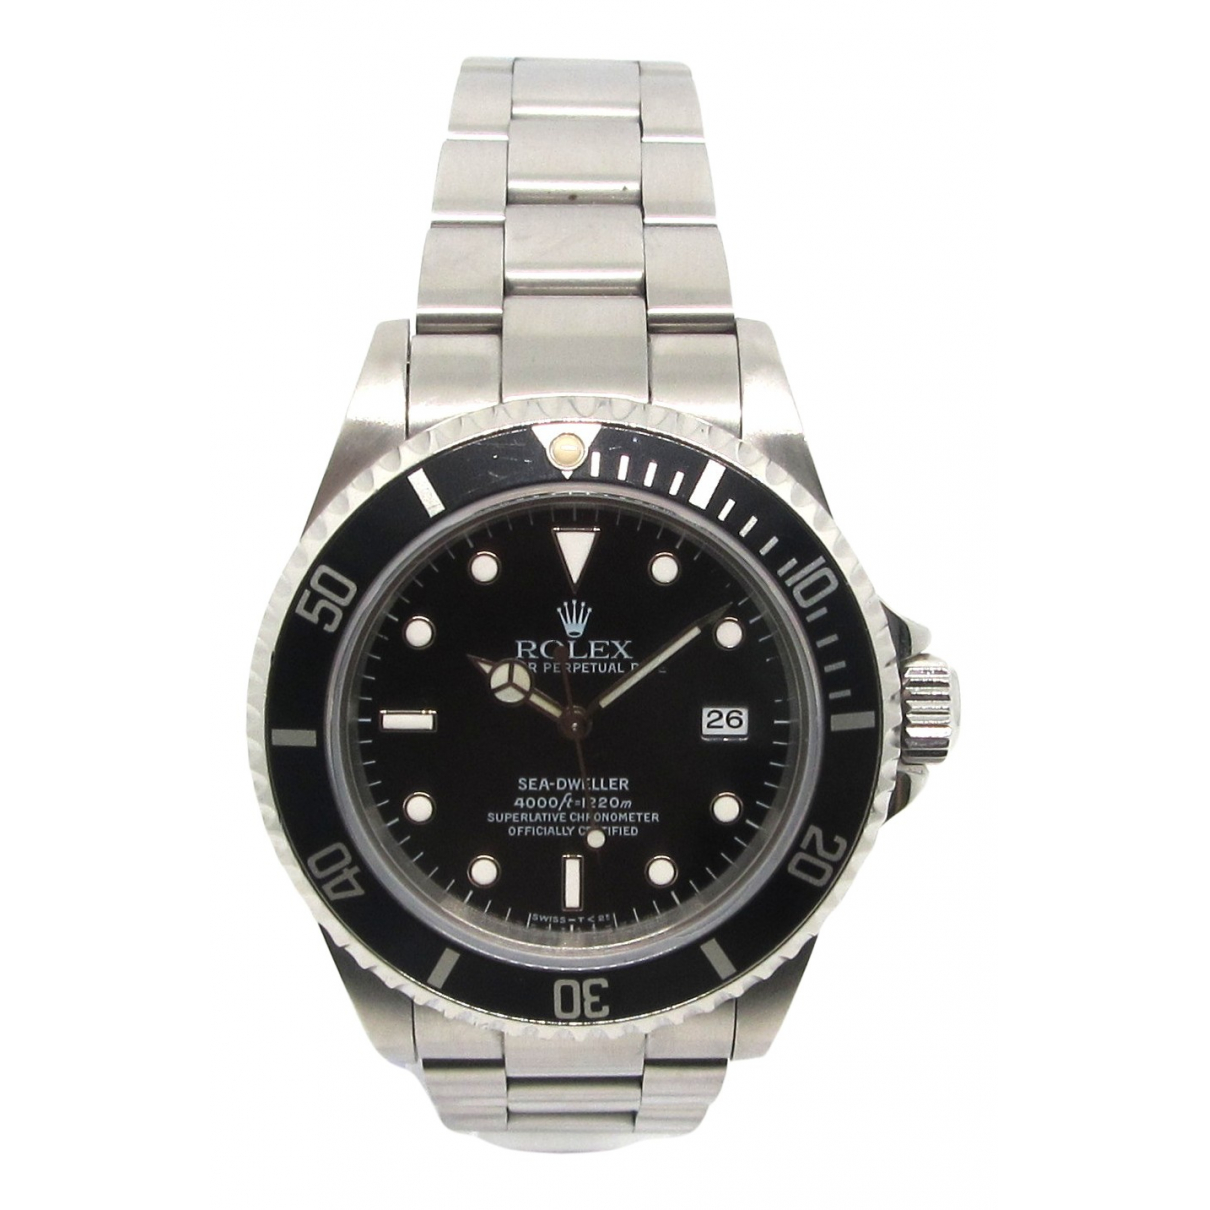 image of Rolex Sea-Dweller watch